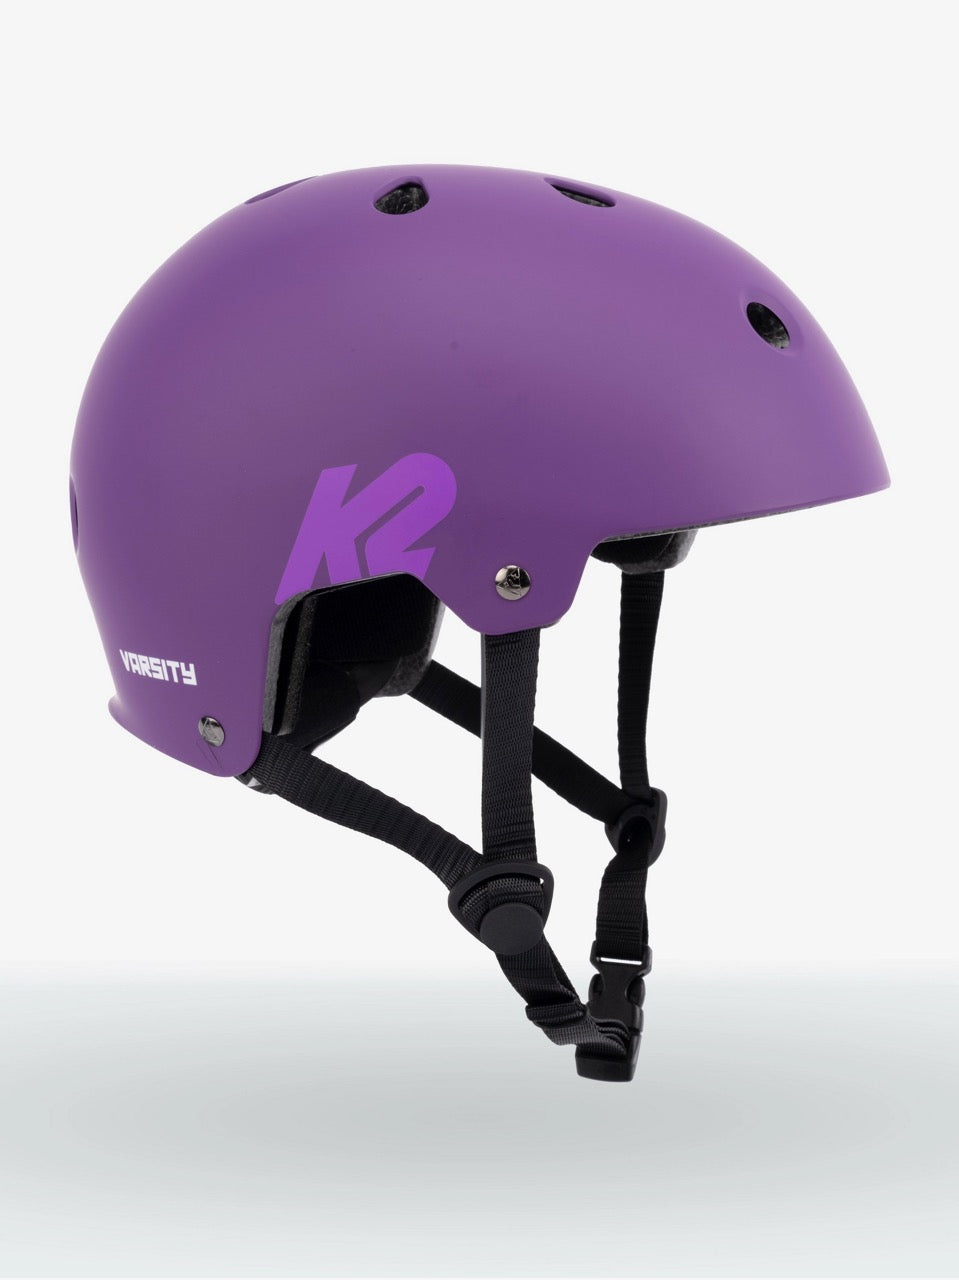 Casco ajustable K2 Varsity - Púrpura